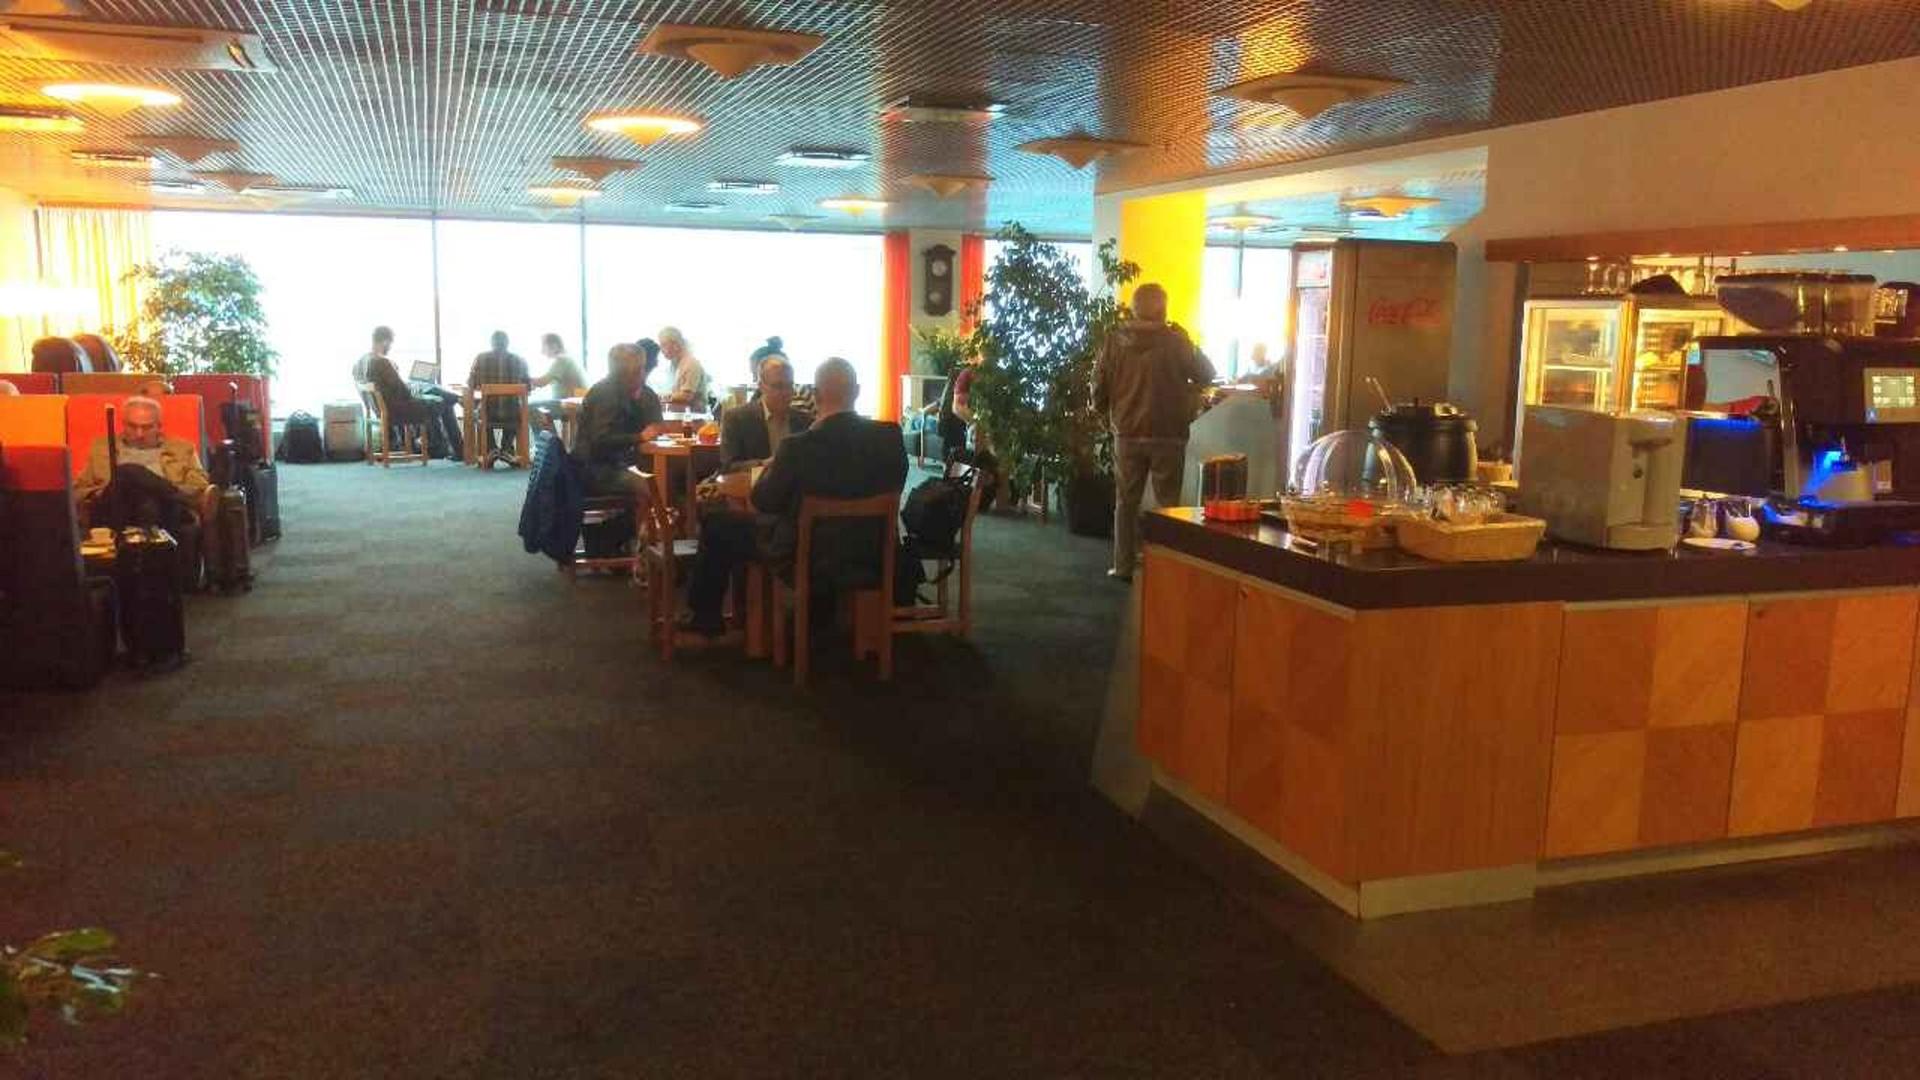 Tallinn Airport LHV Lounge image 20 of 20